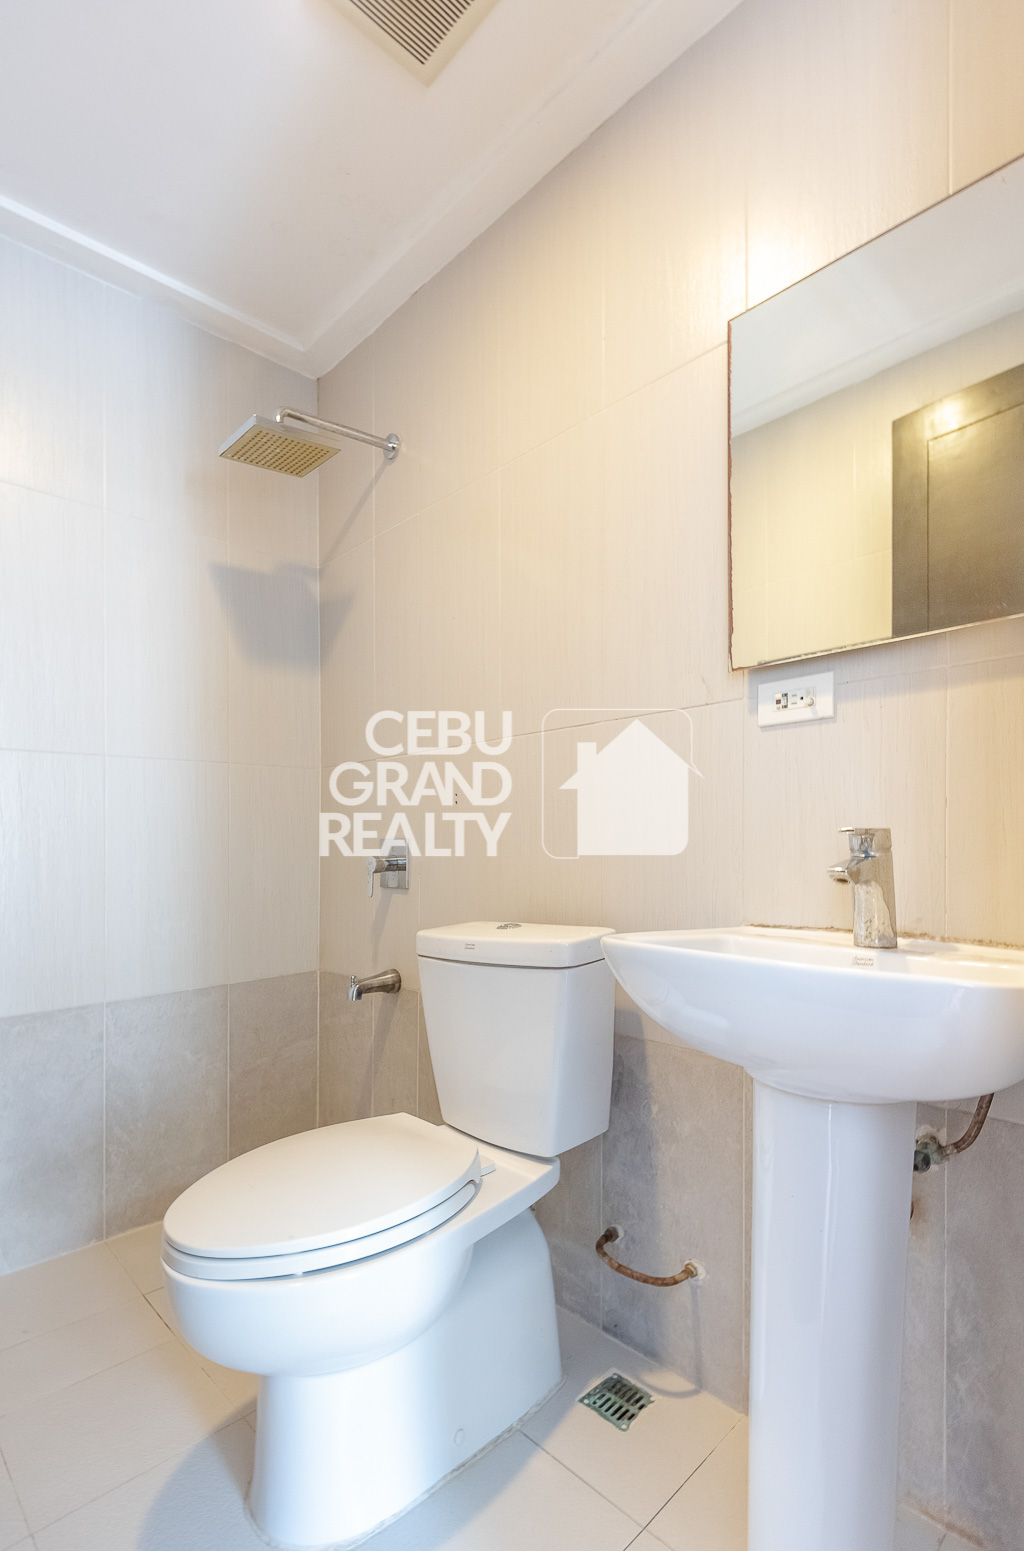 RHPN7 3 Bedroom House for Rent in Pristina North Residences - Cebu Grand Realty (10)